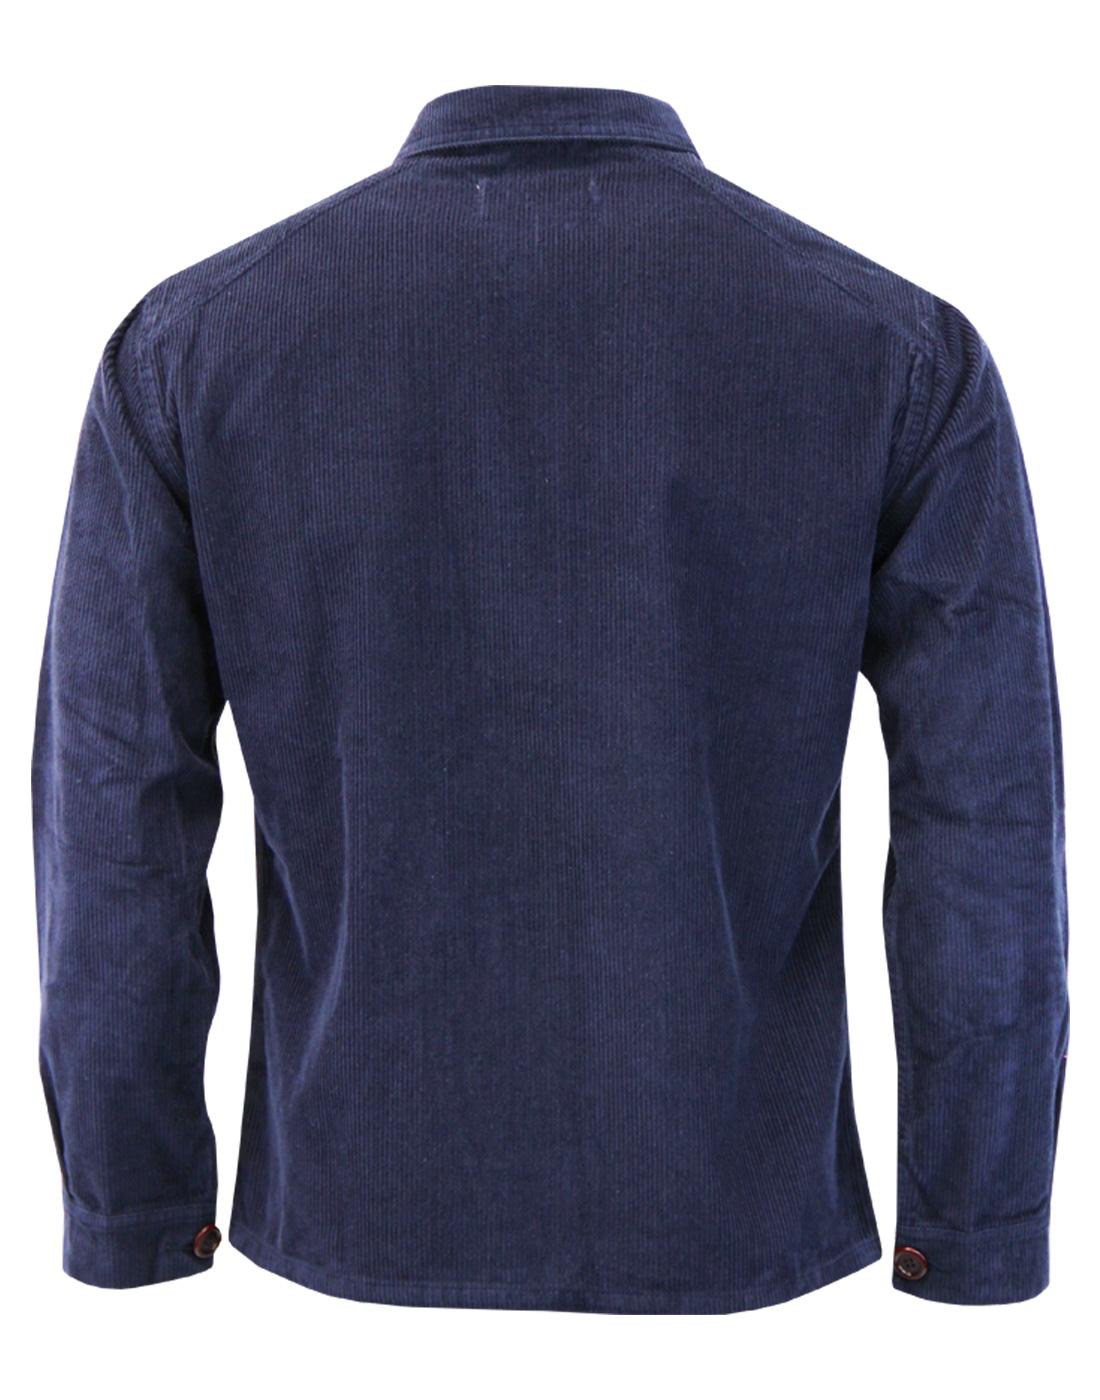 AFIELD Porter Men's Retro Mod Cotton Corduroy Shirt Jacket Navy